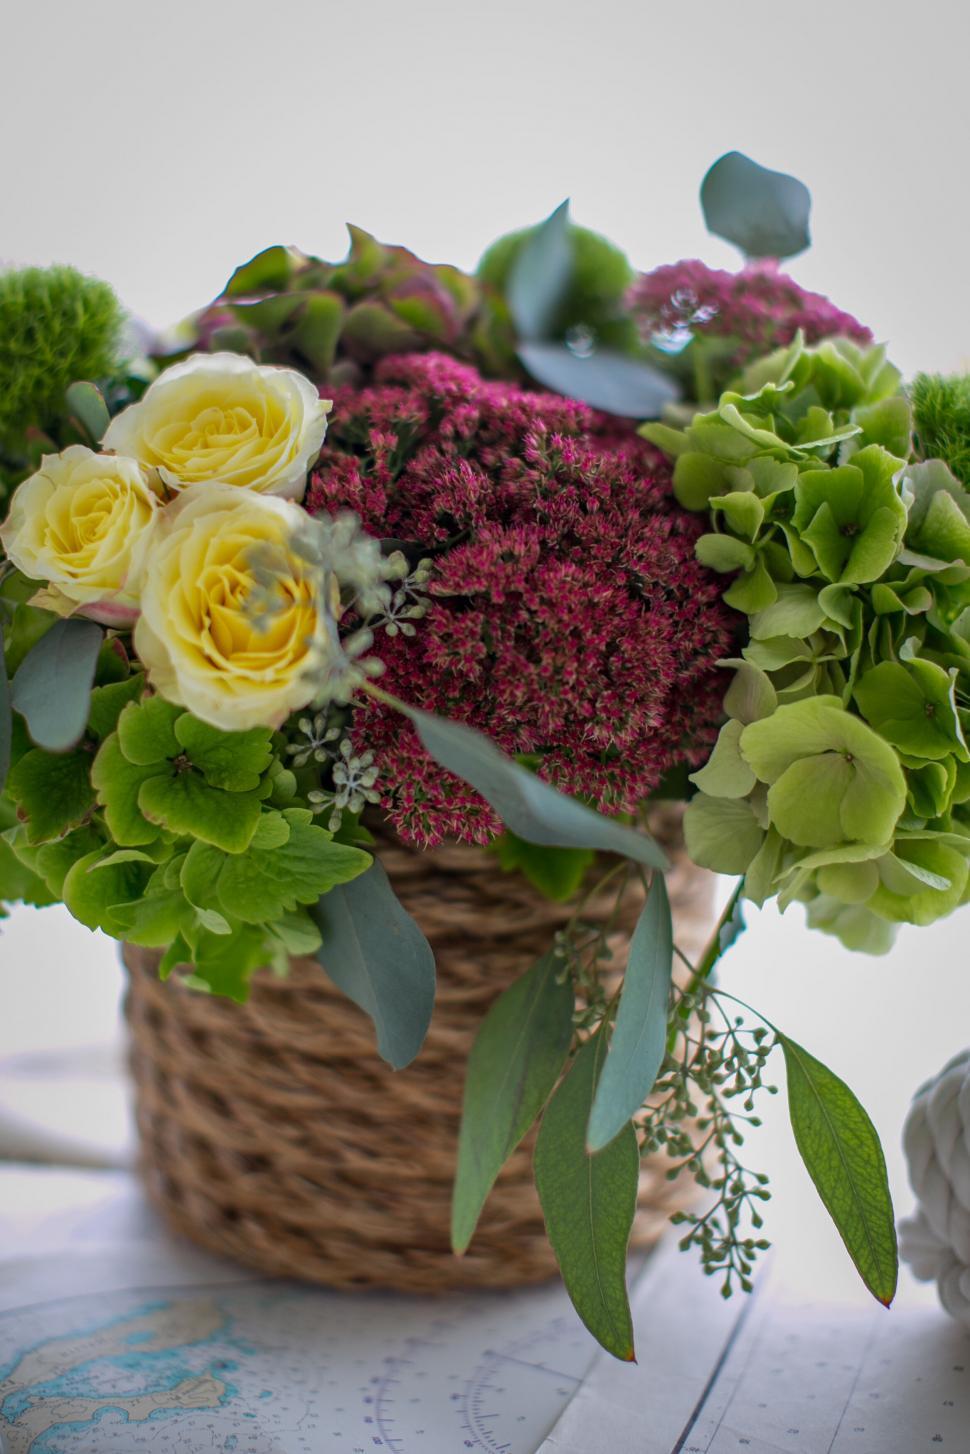 Free Image of Bouquet of flowers in a wicker basket centerpiece 